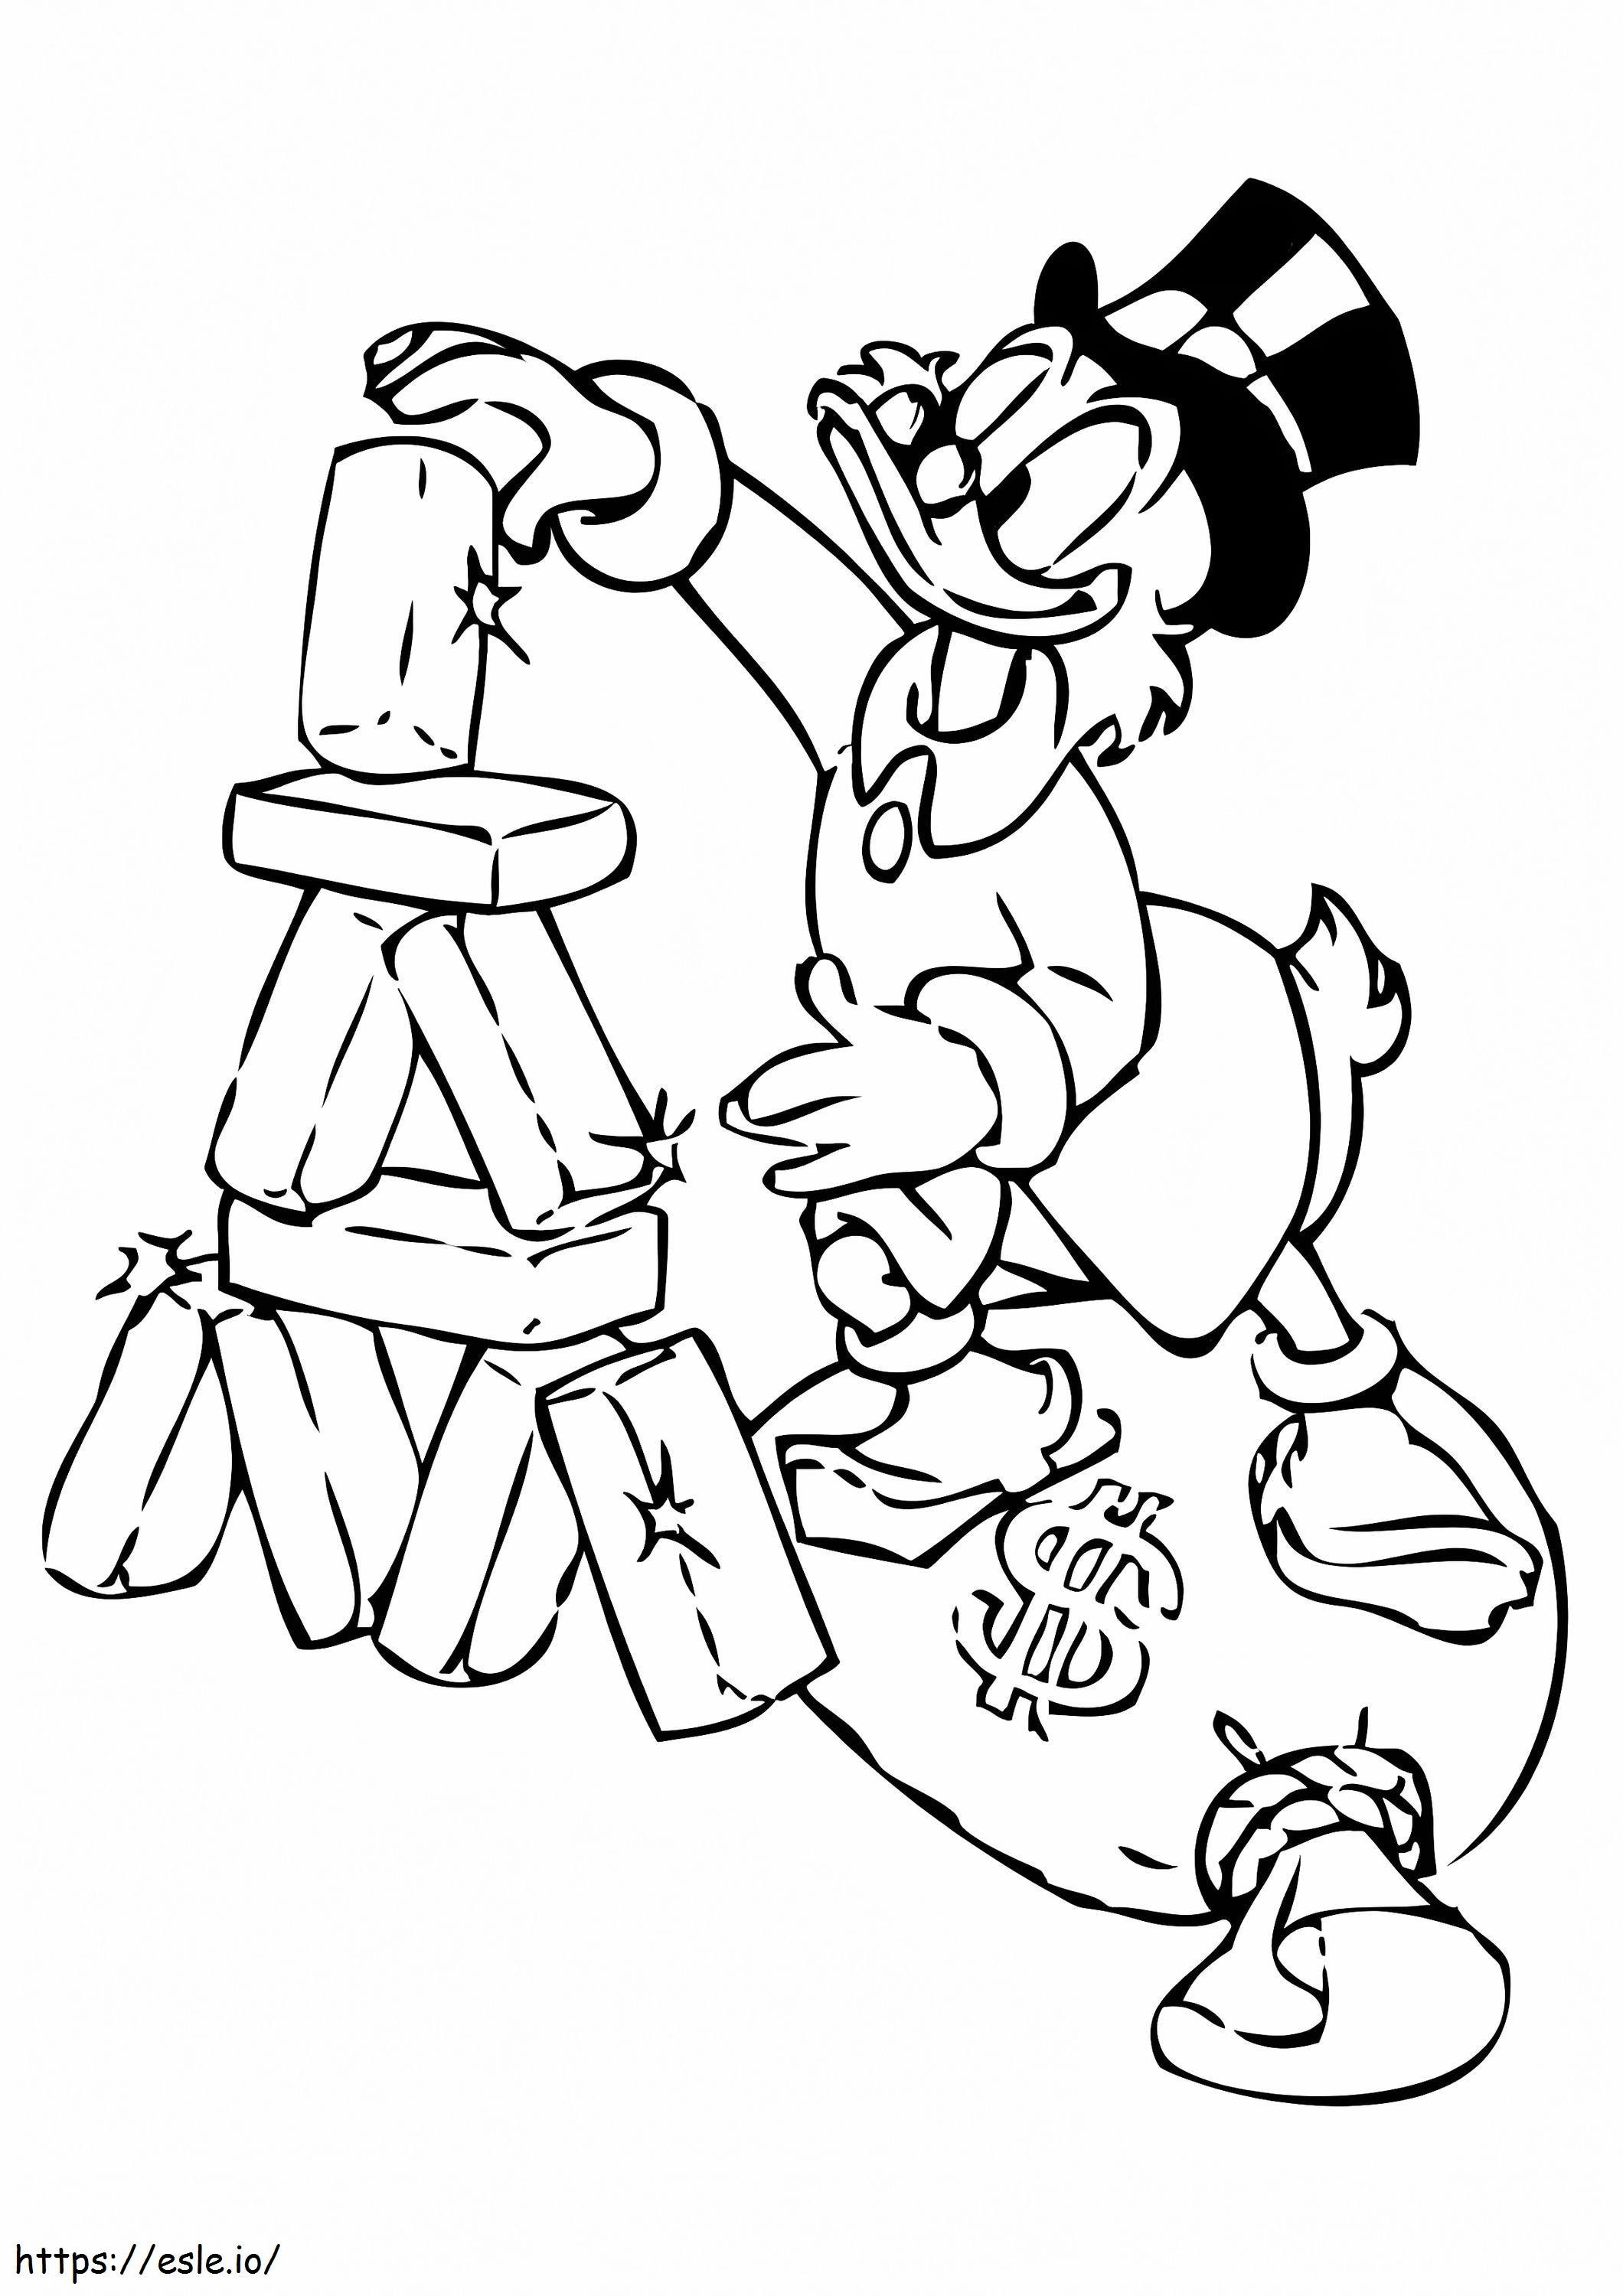 Coloriage Disney Scrooge McDuck à imprimer dessin